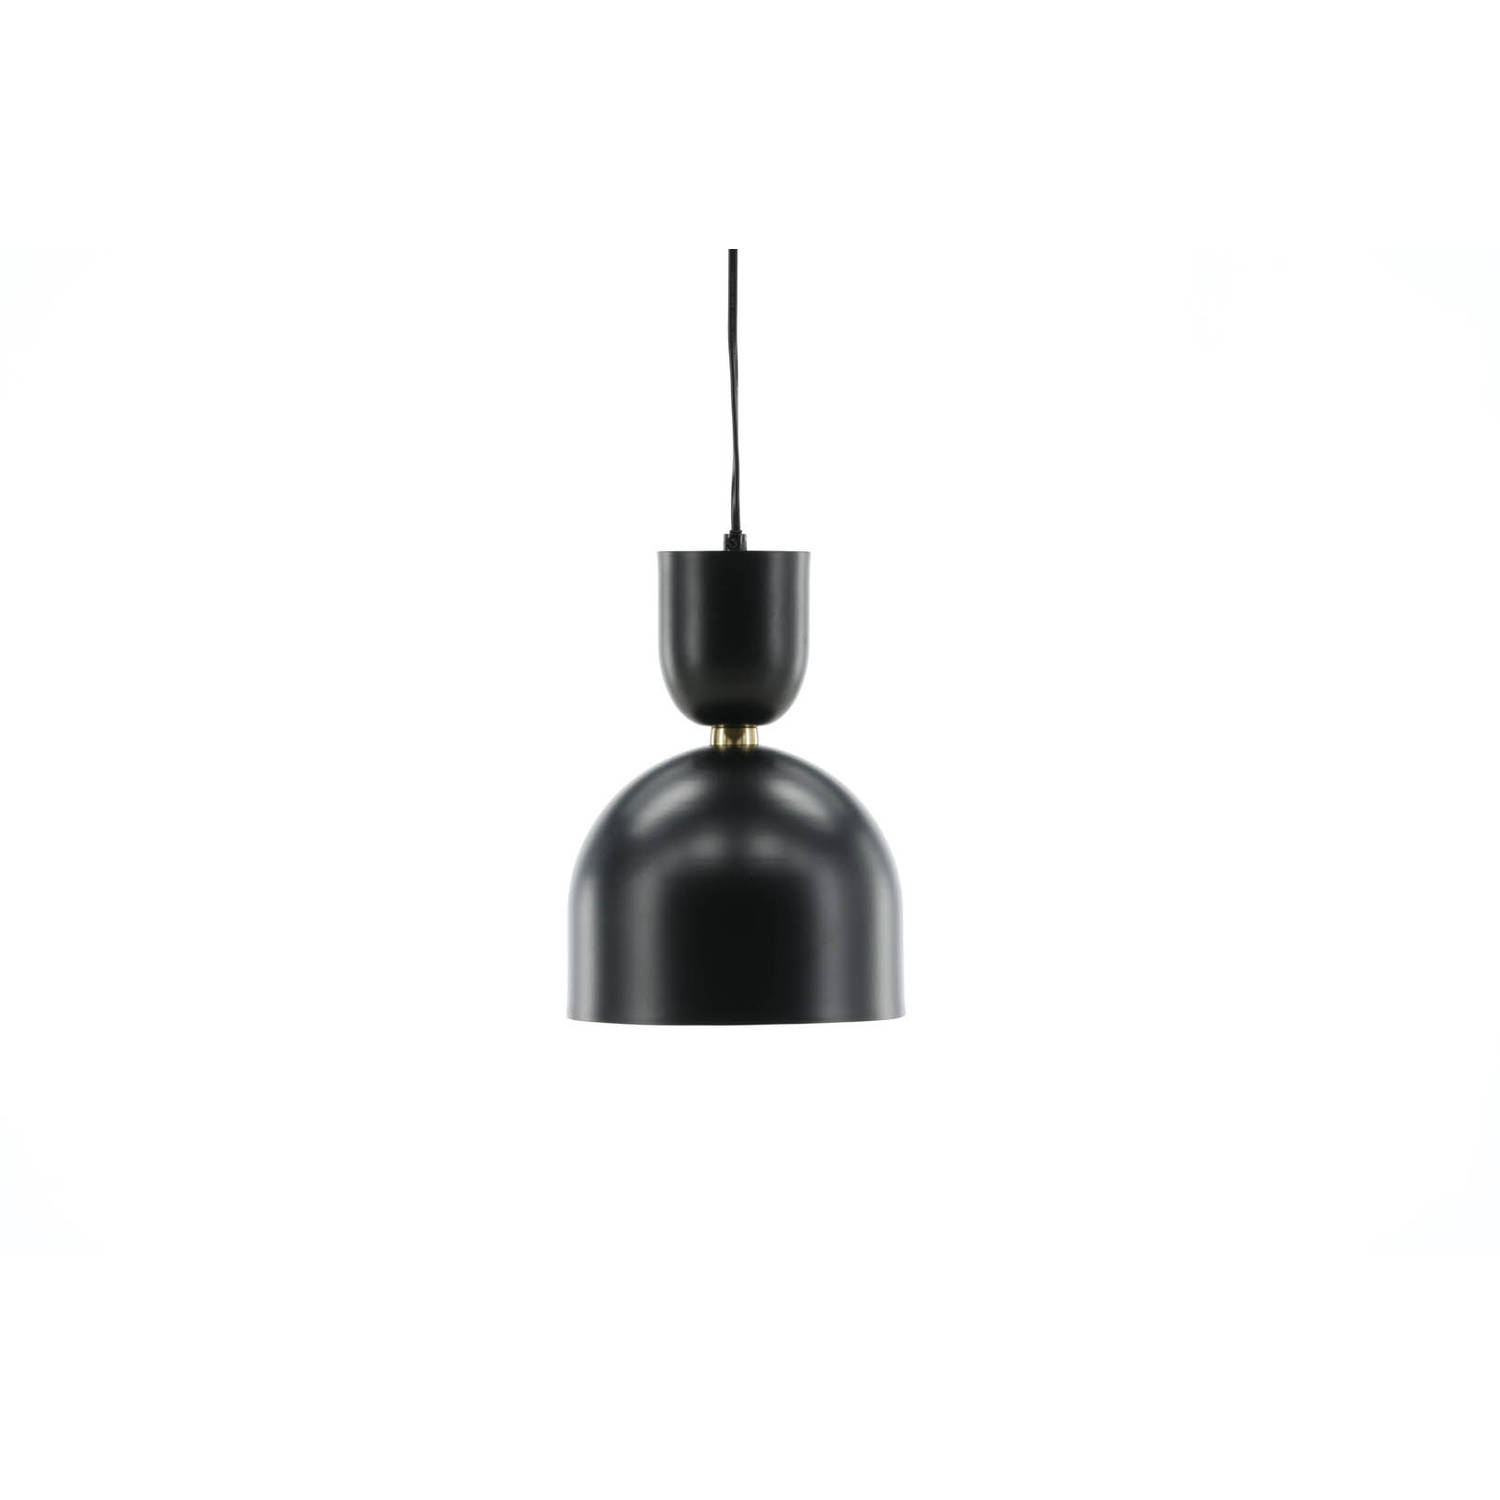 Hioshop Tim verlichting hanglamp 20x20x120cm staal zwart.